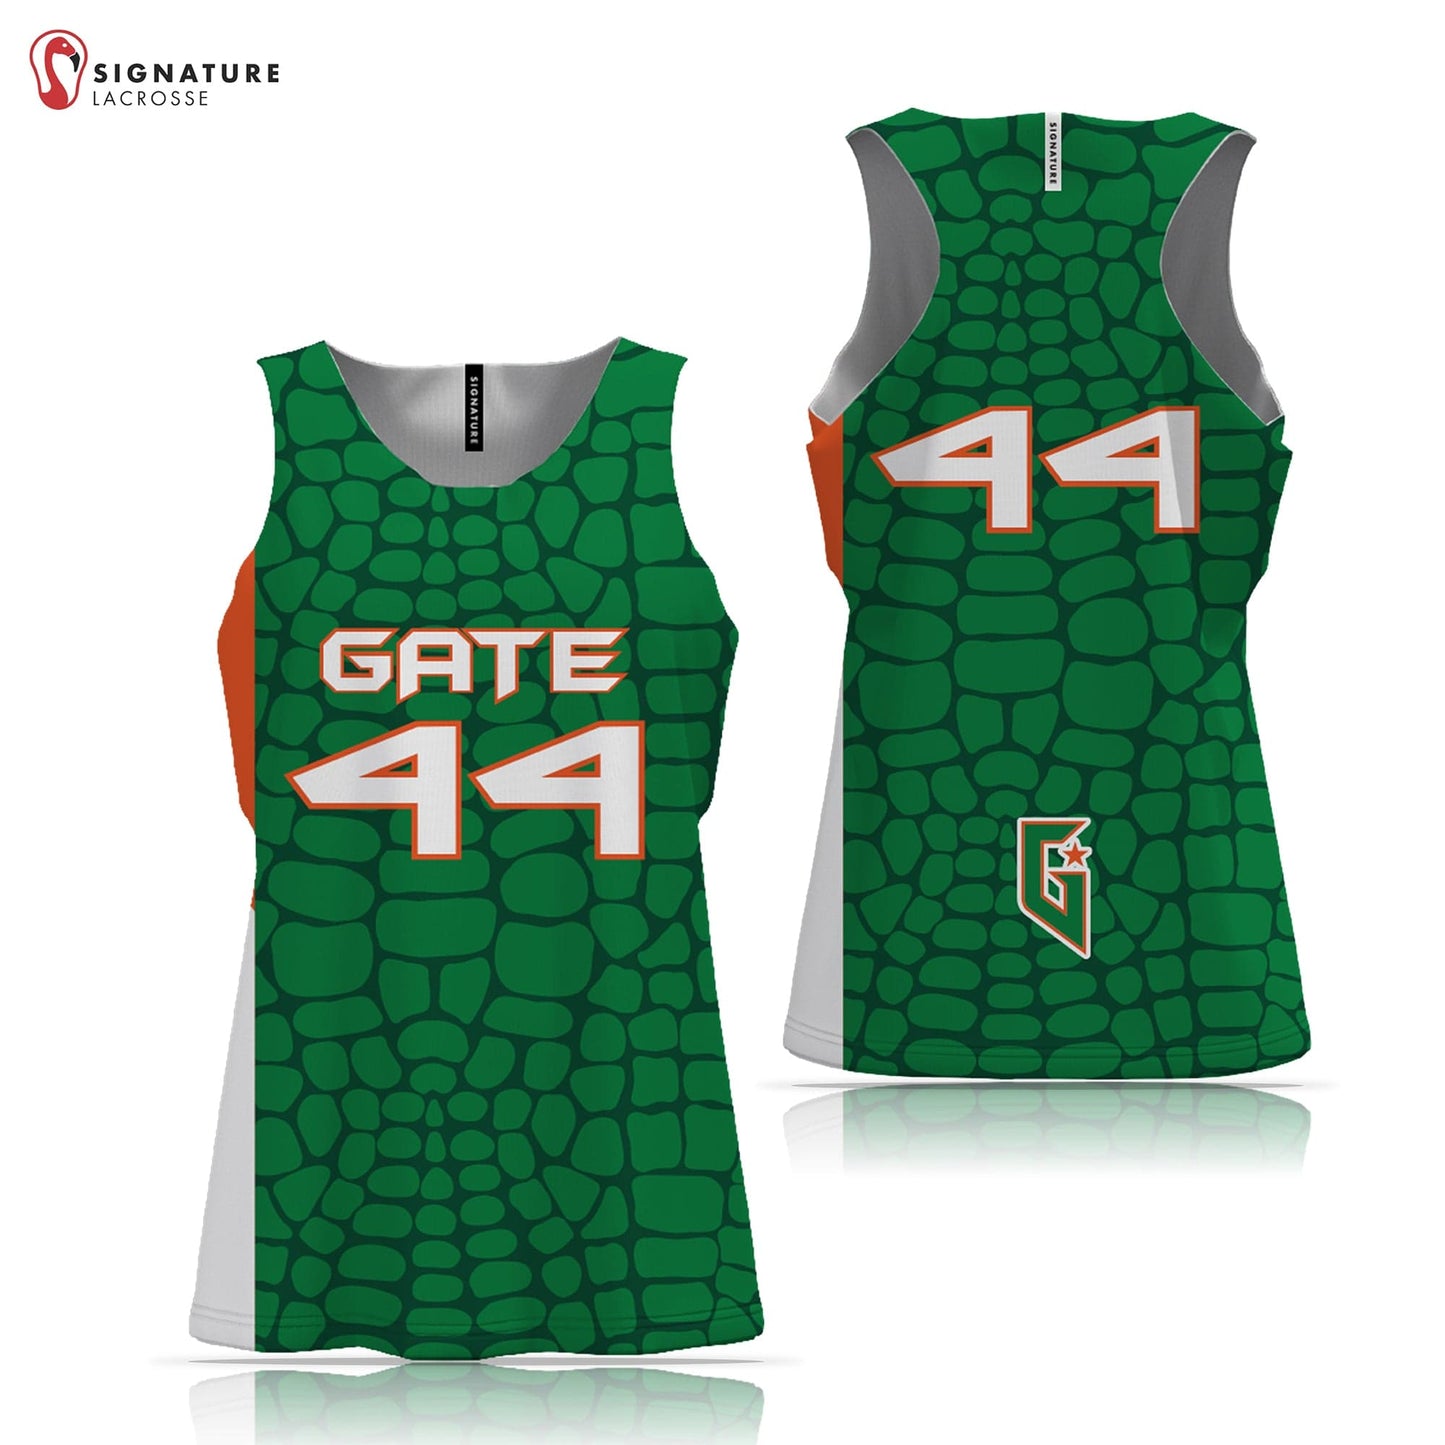 Gateway Gators Lacrosse Women's 3 Piece Player Game Package Signature Lacrosse